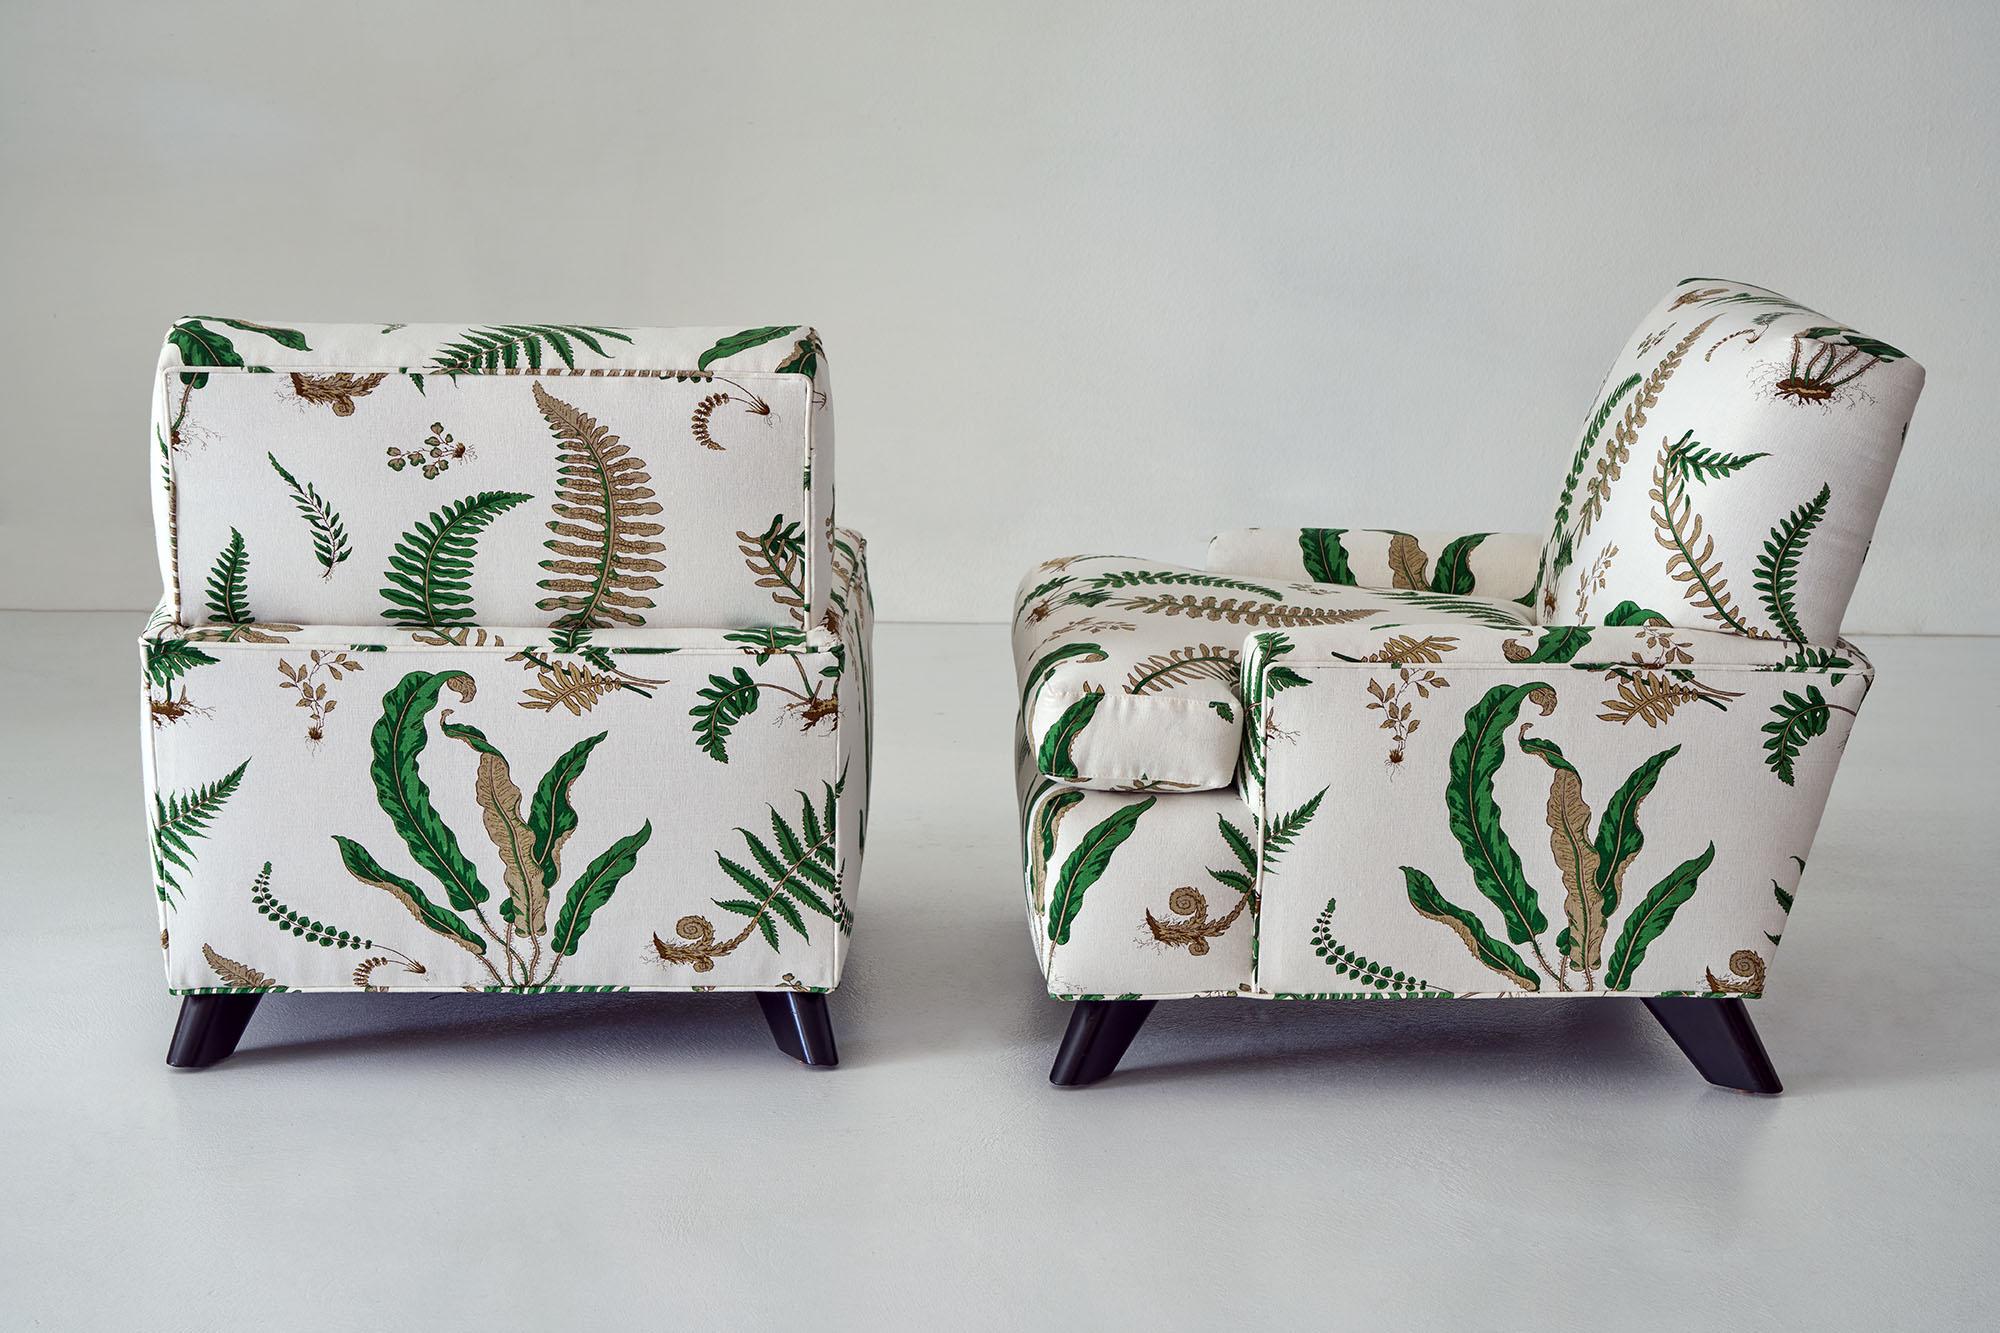 American Pair of Green Fern Ledgeback Seniah Chairs by William Haines